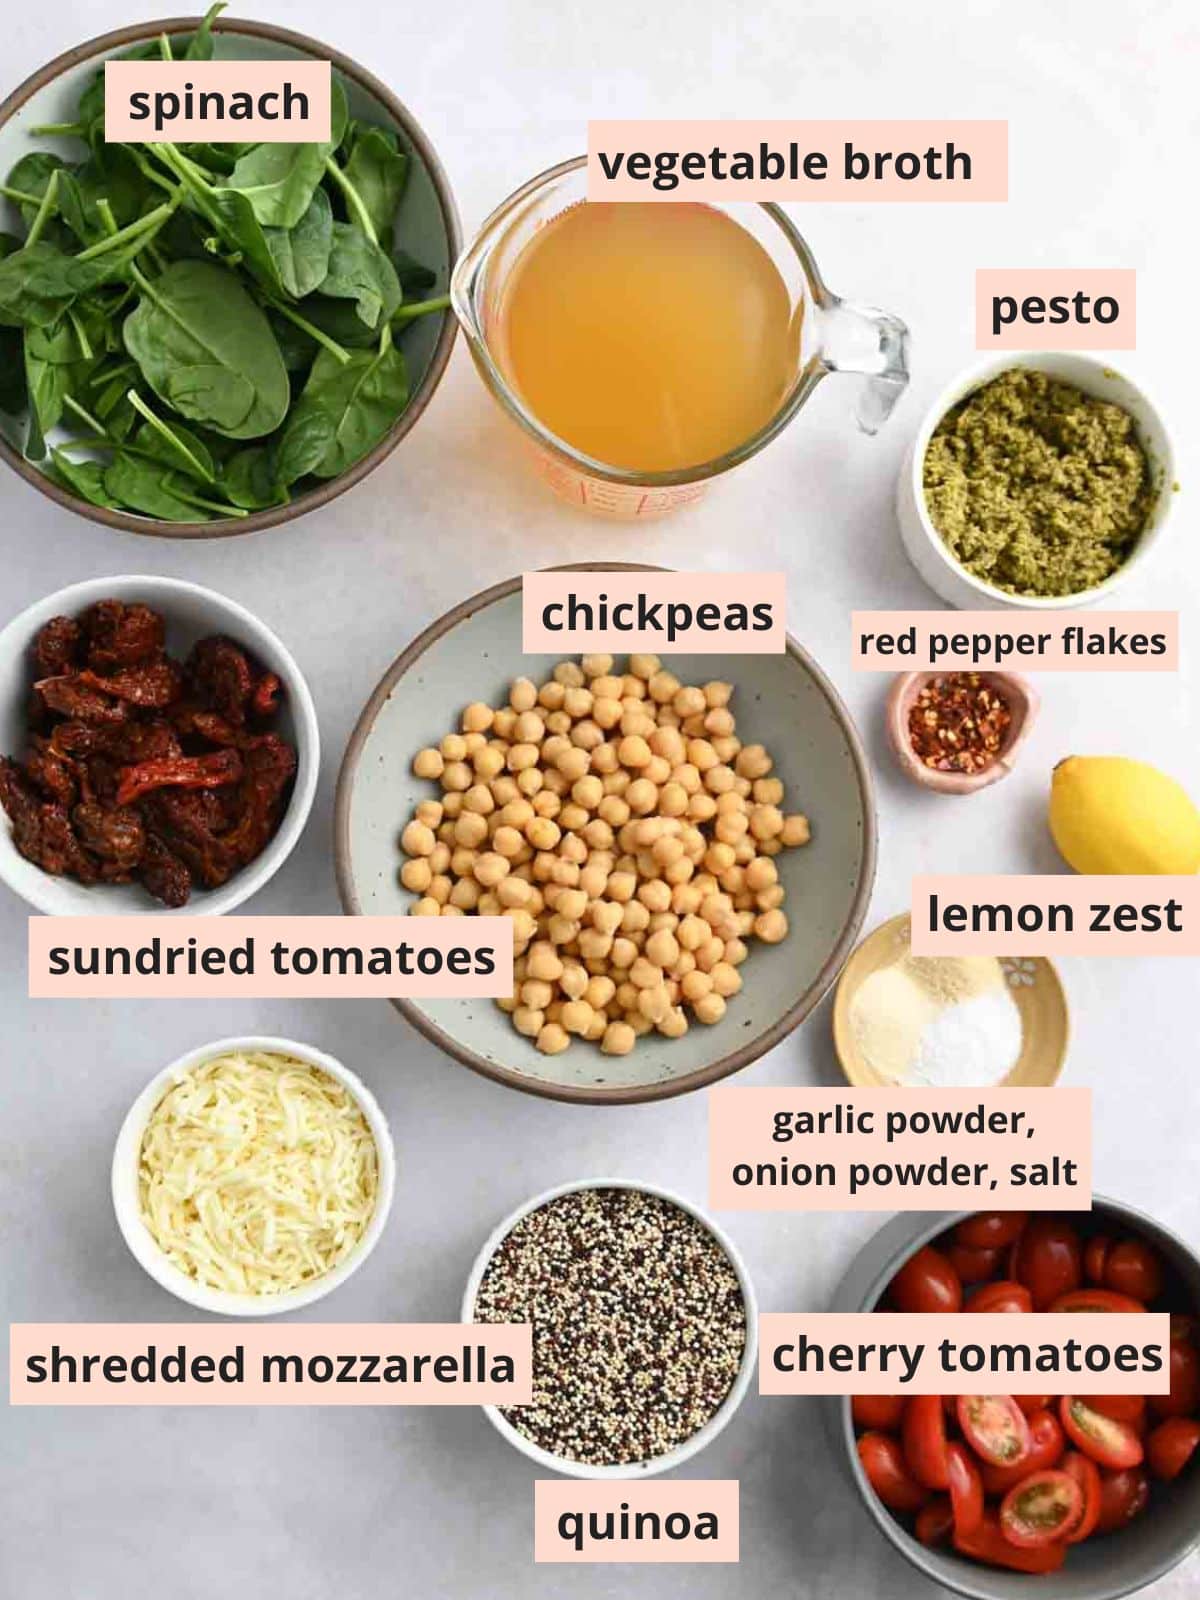 Labeled ingredients used to make quinoa pesto bake.